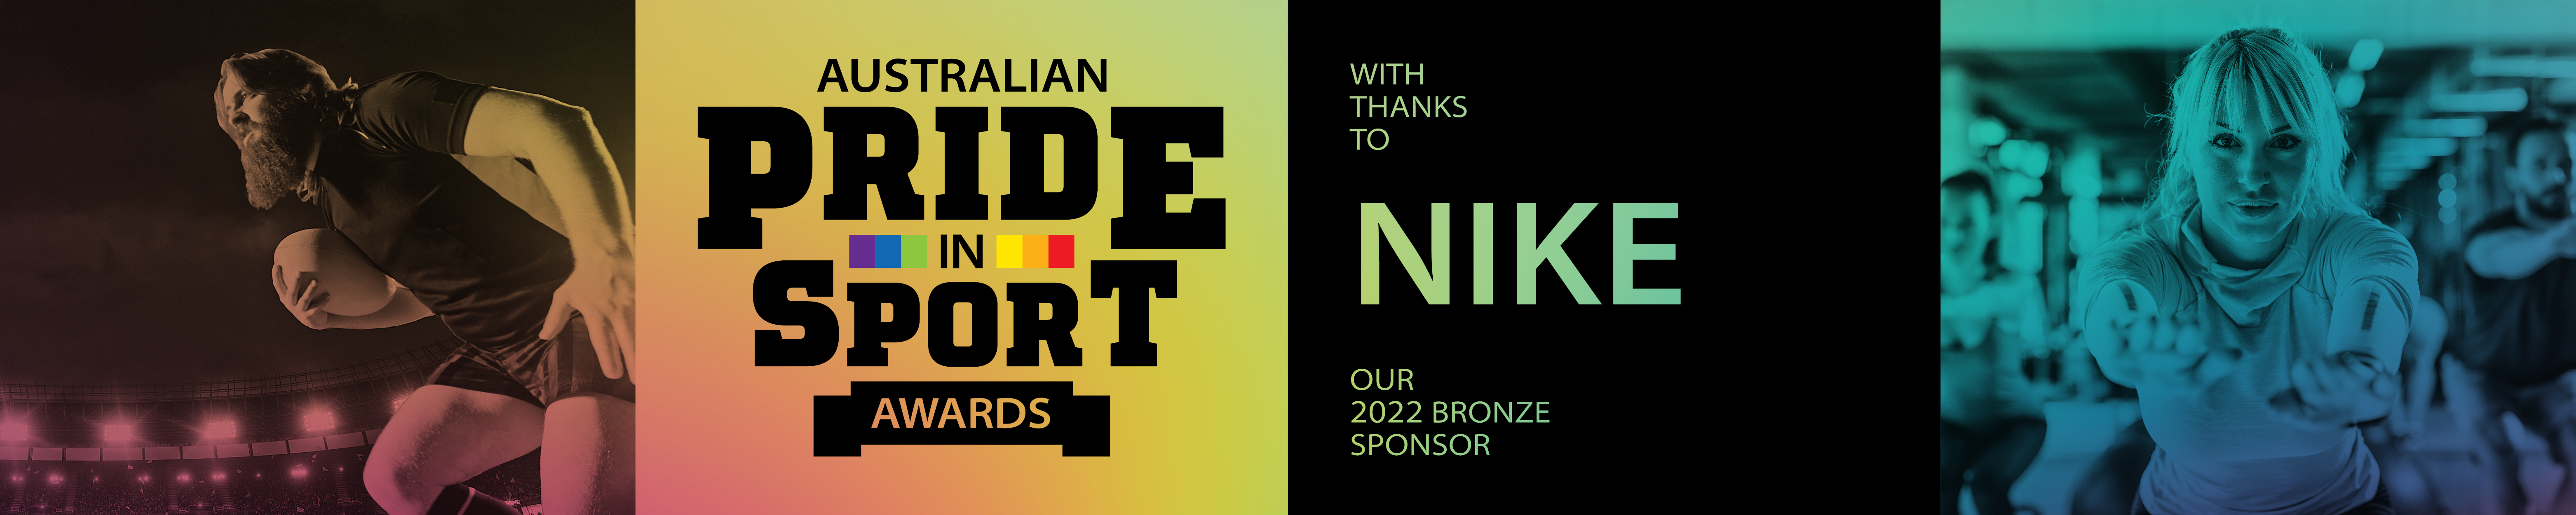 PIS_AwardsBanners_Sponsors_Nike